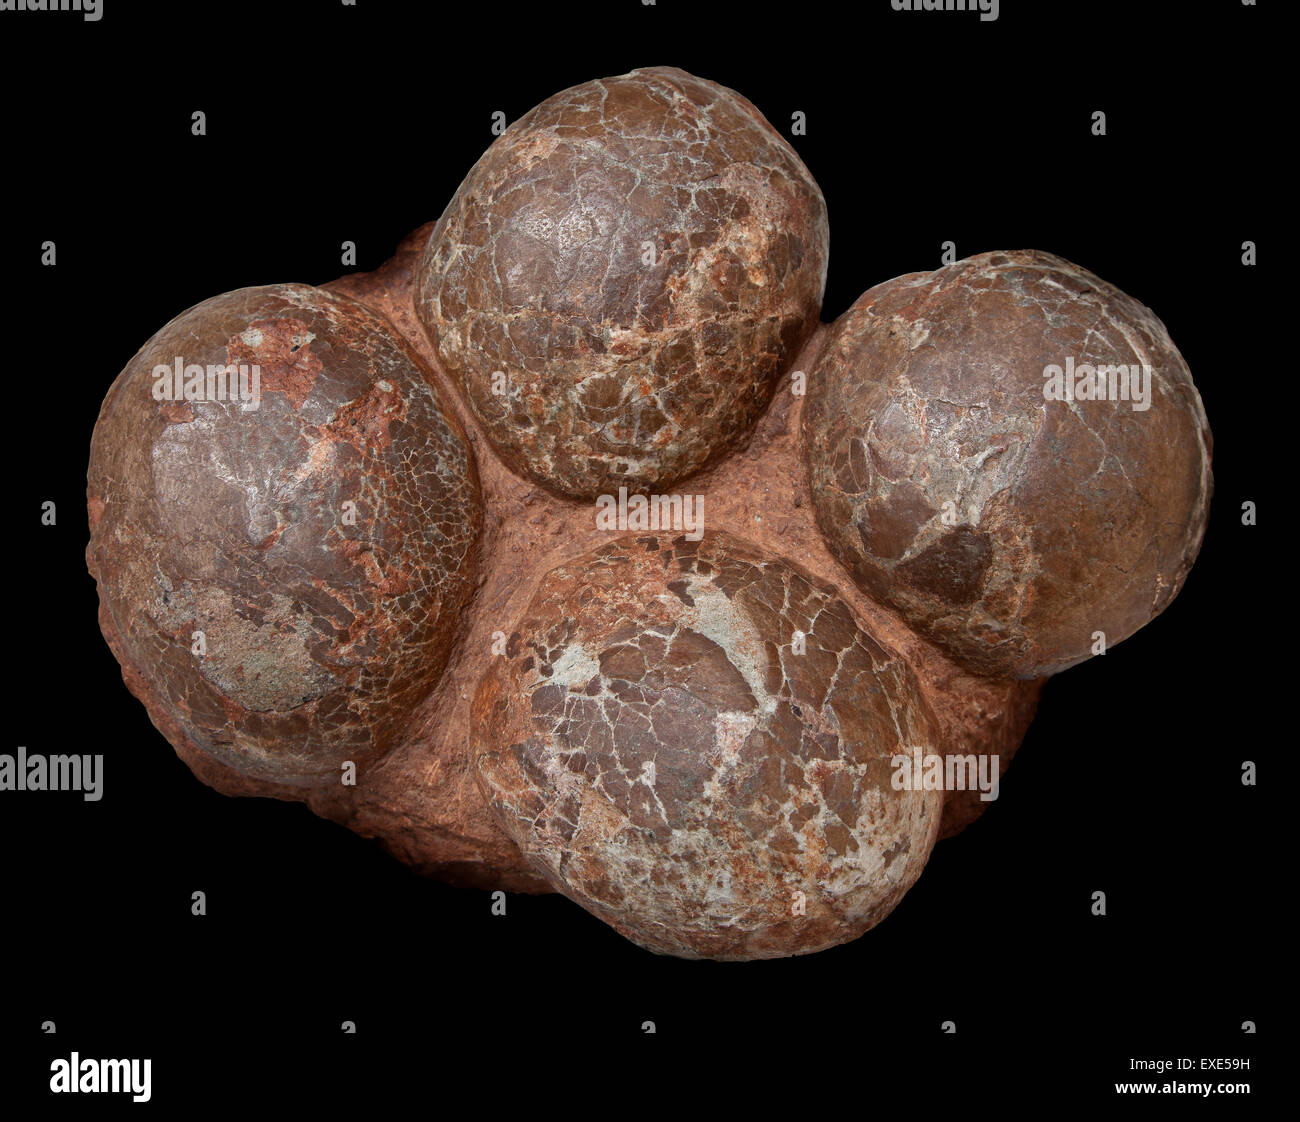 Sauropod fossilized dinosaur eggs in stone matrix, from China Stock Photo